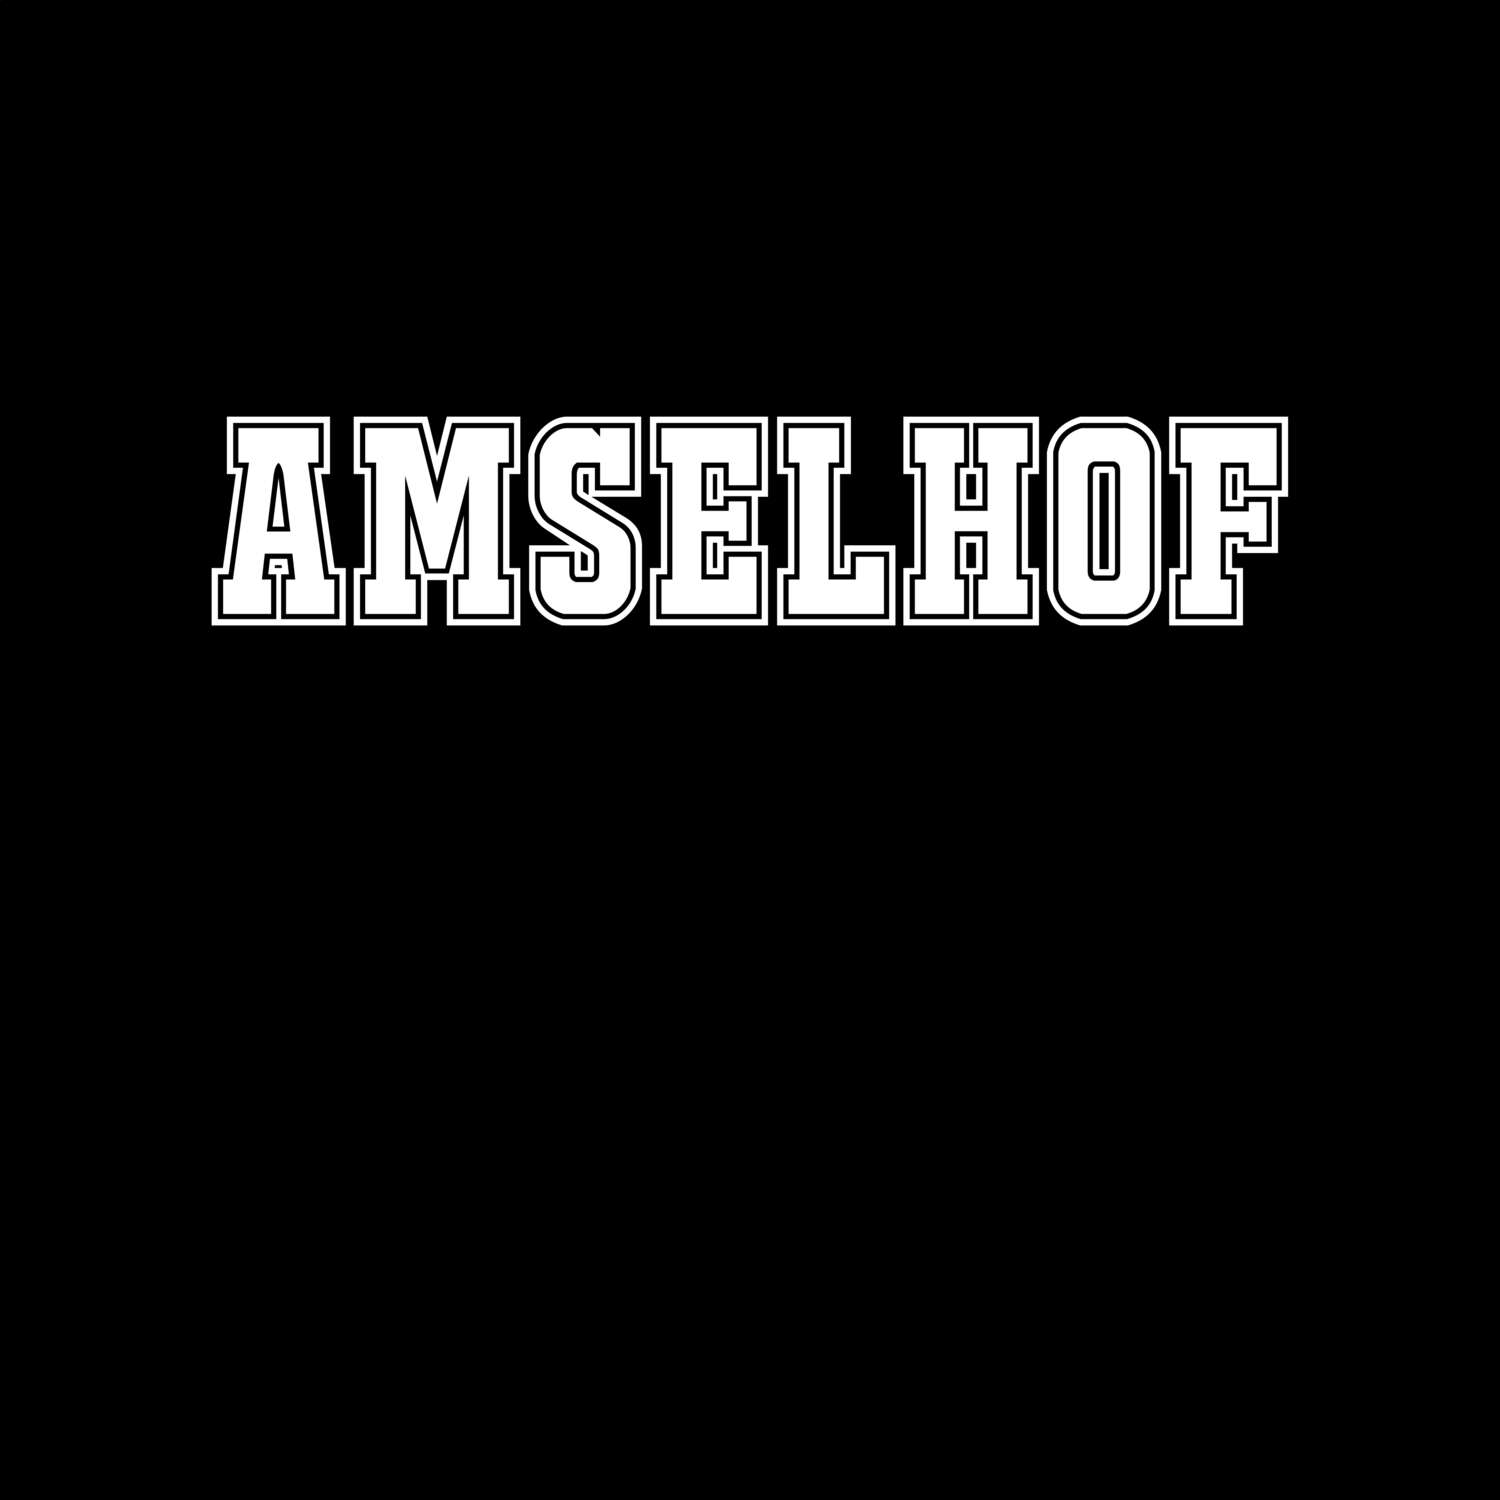 Amselhof T-Shirt »Classic«